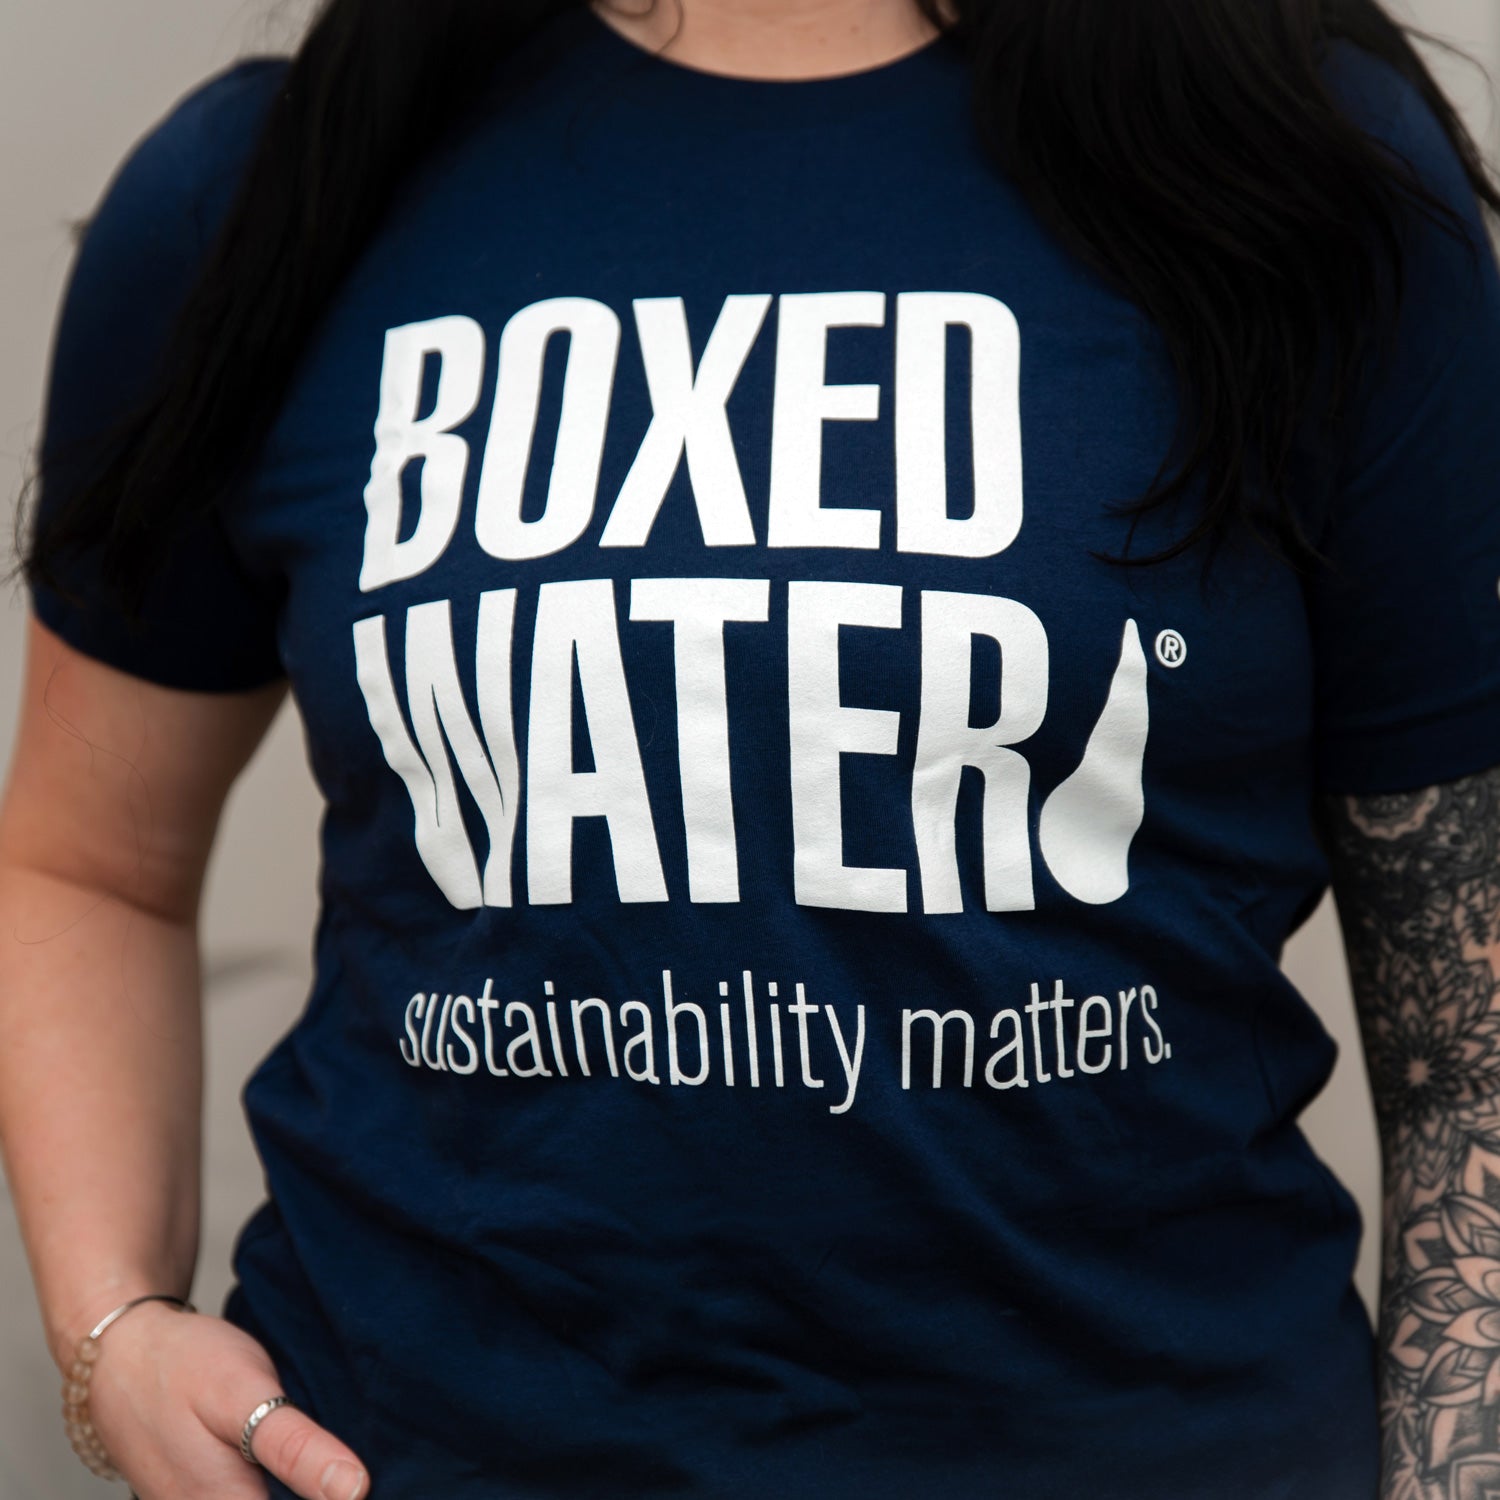 Sustainability Matters T-shirt